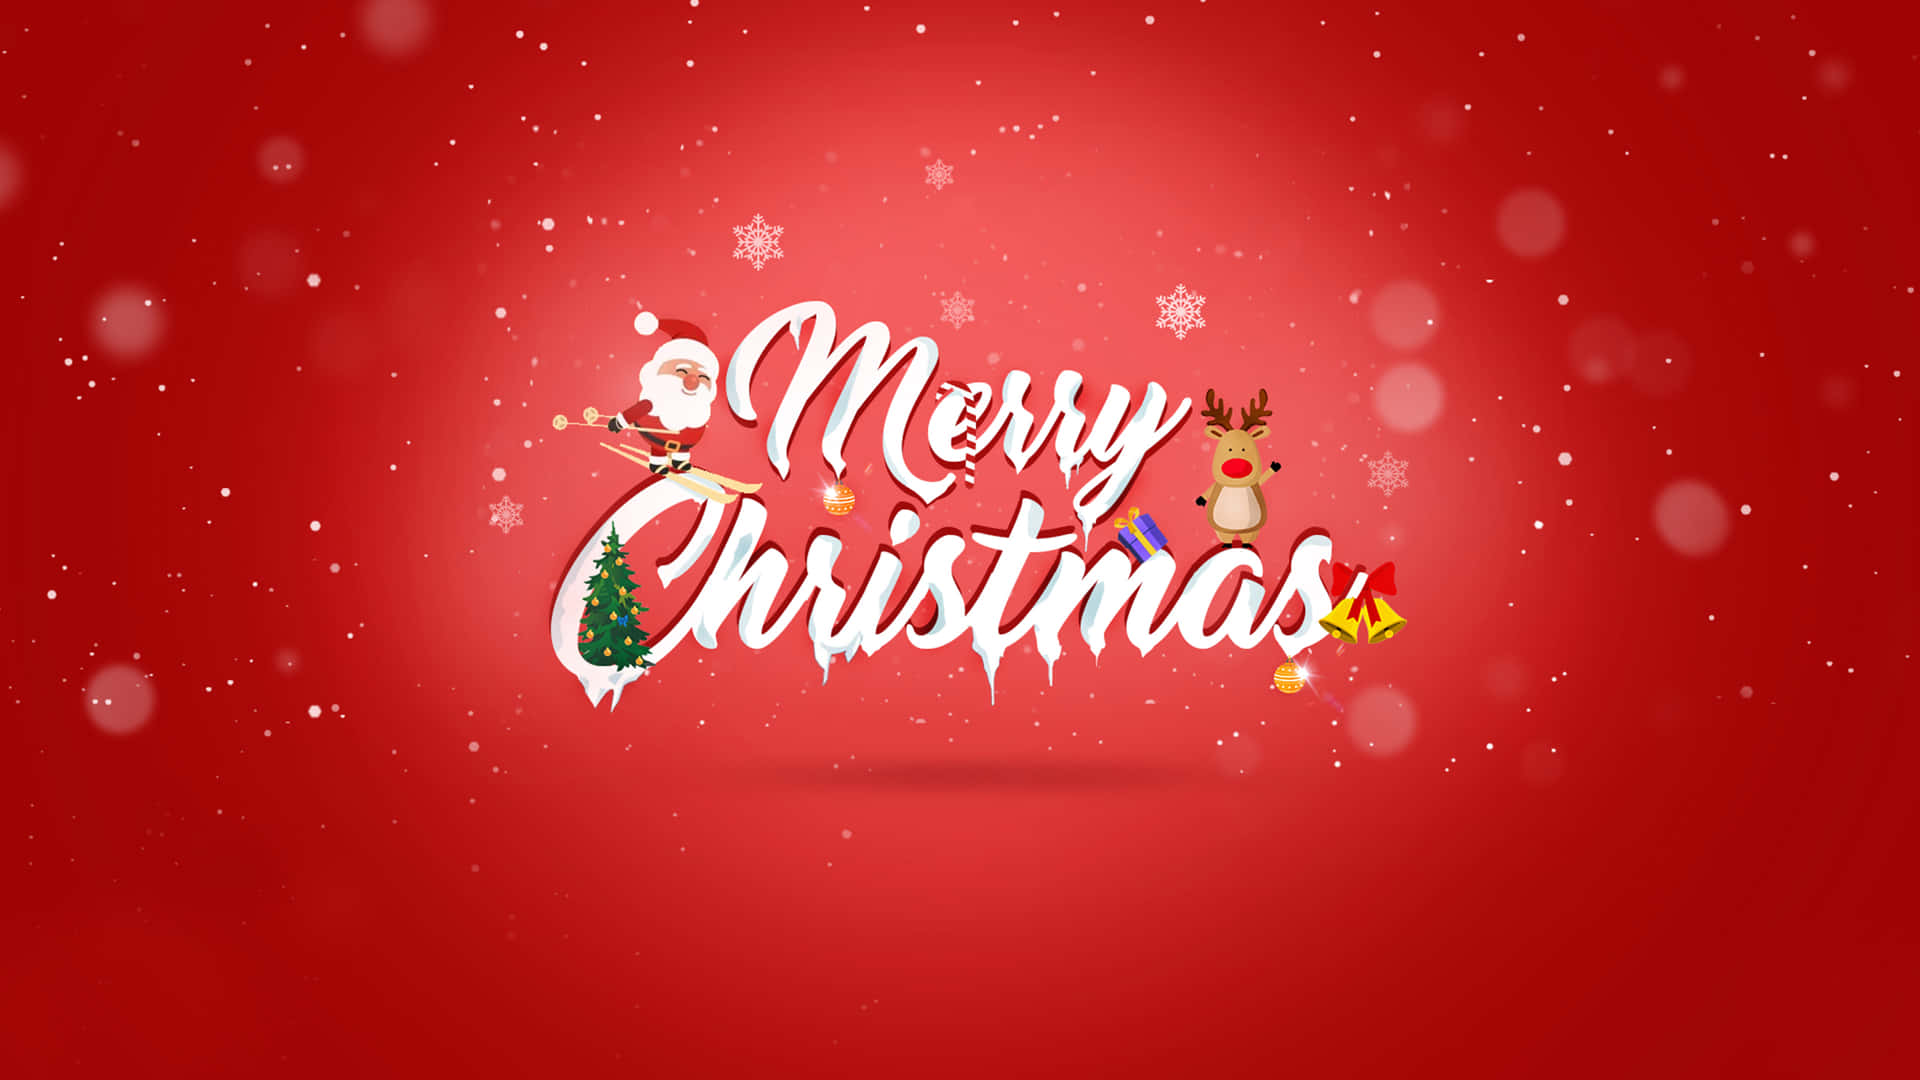 Wishing You A Very Merry Christmas!